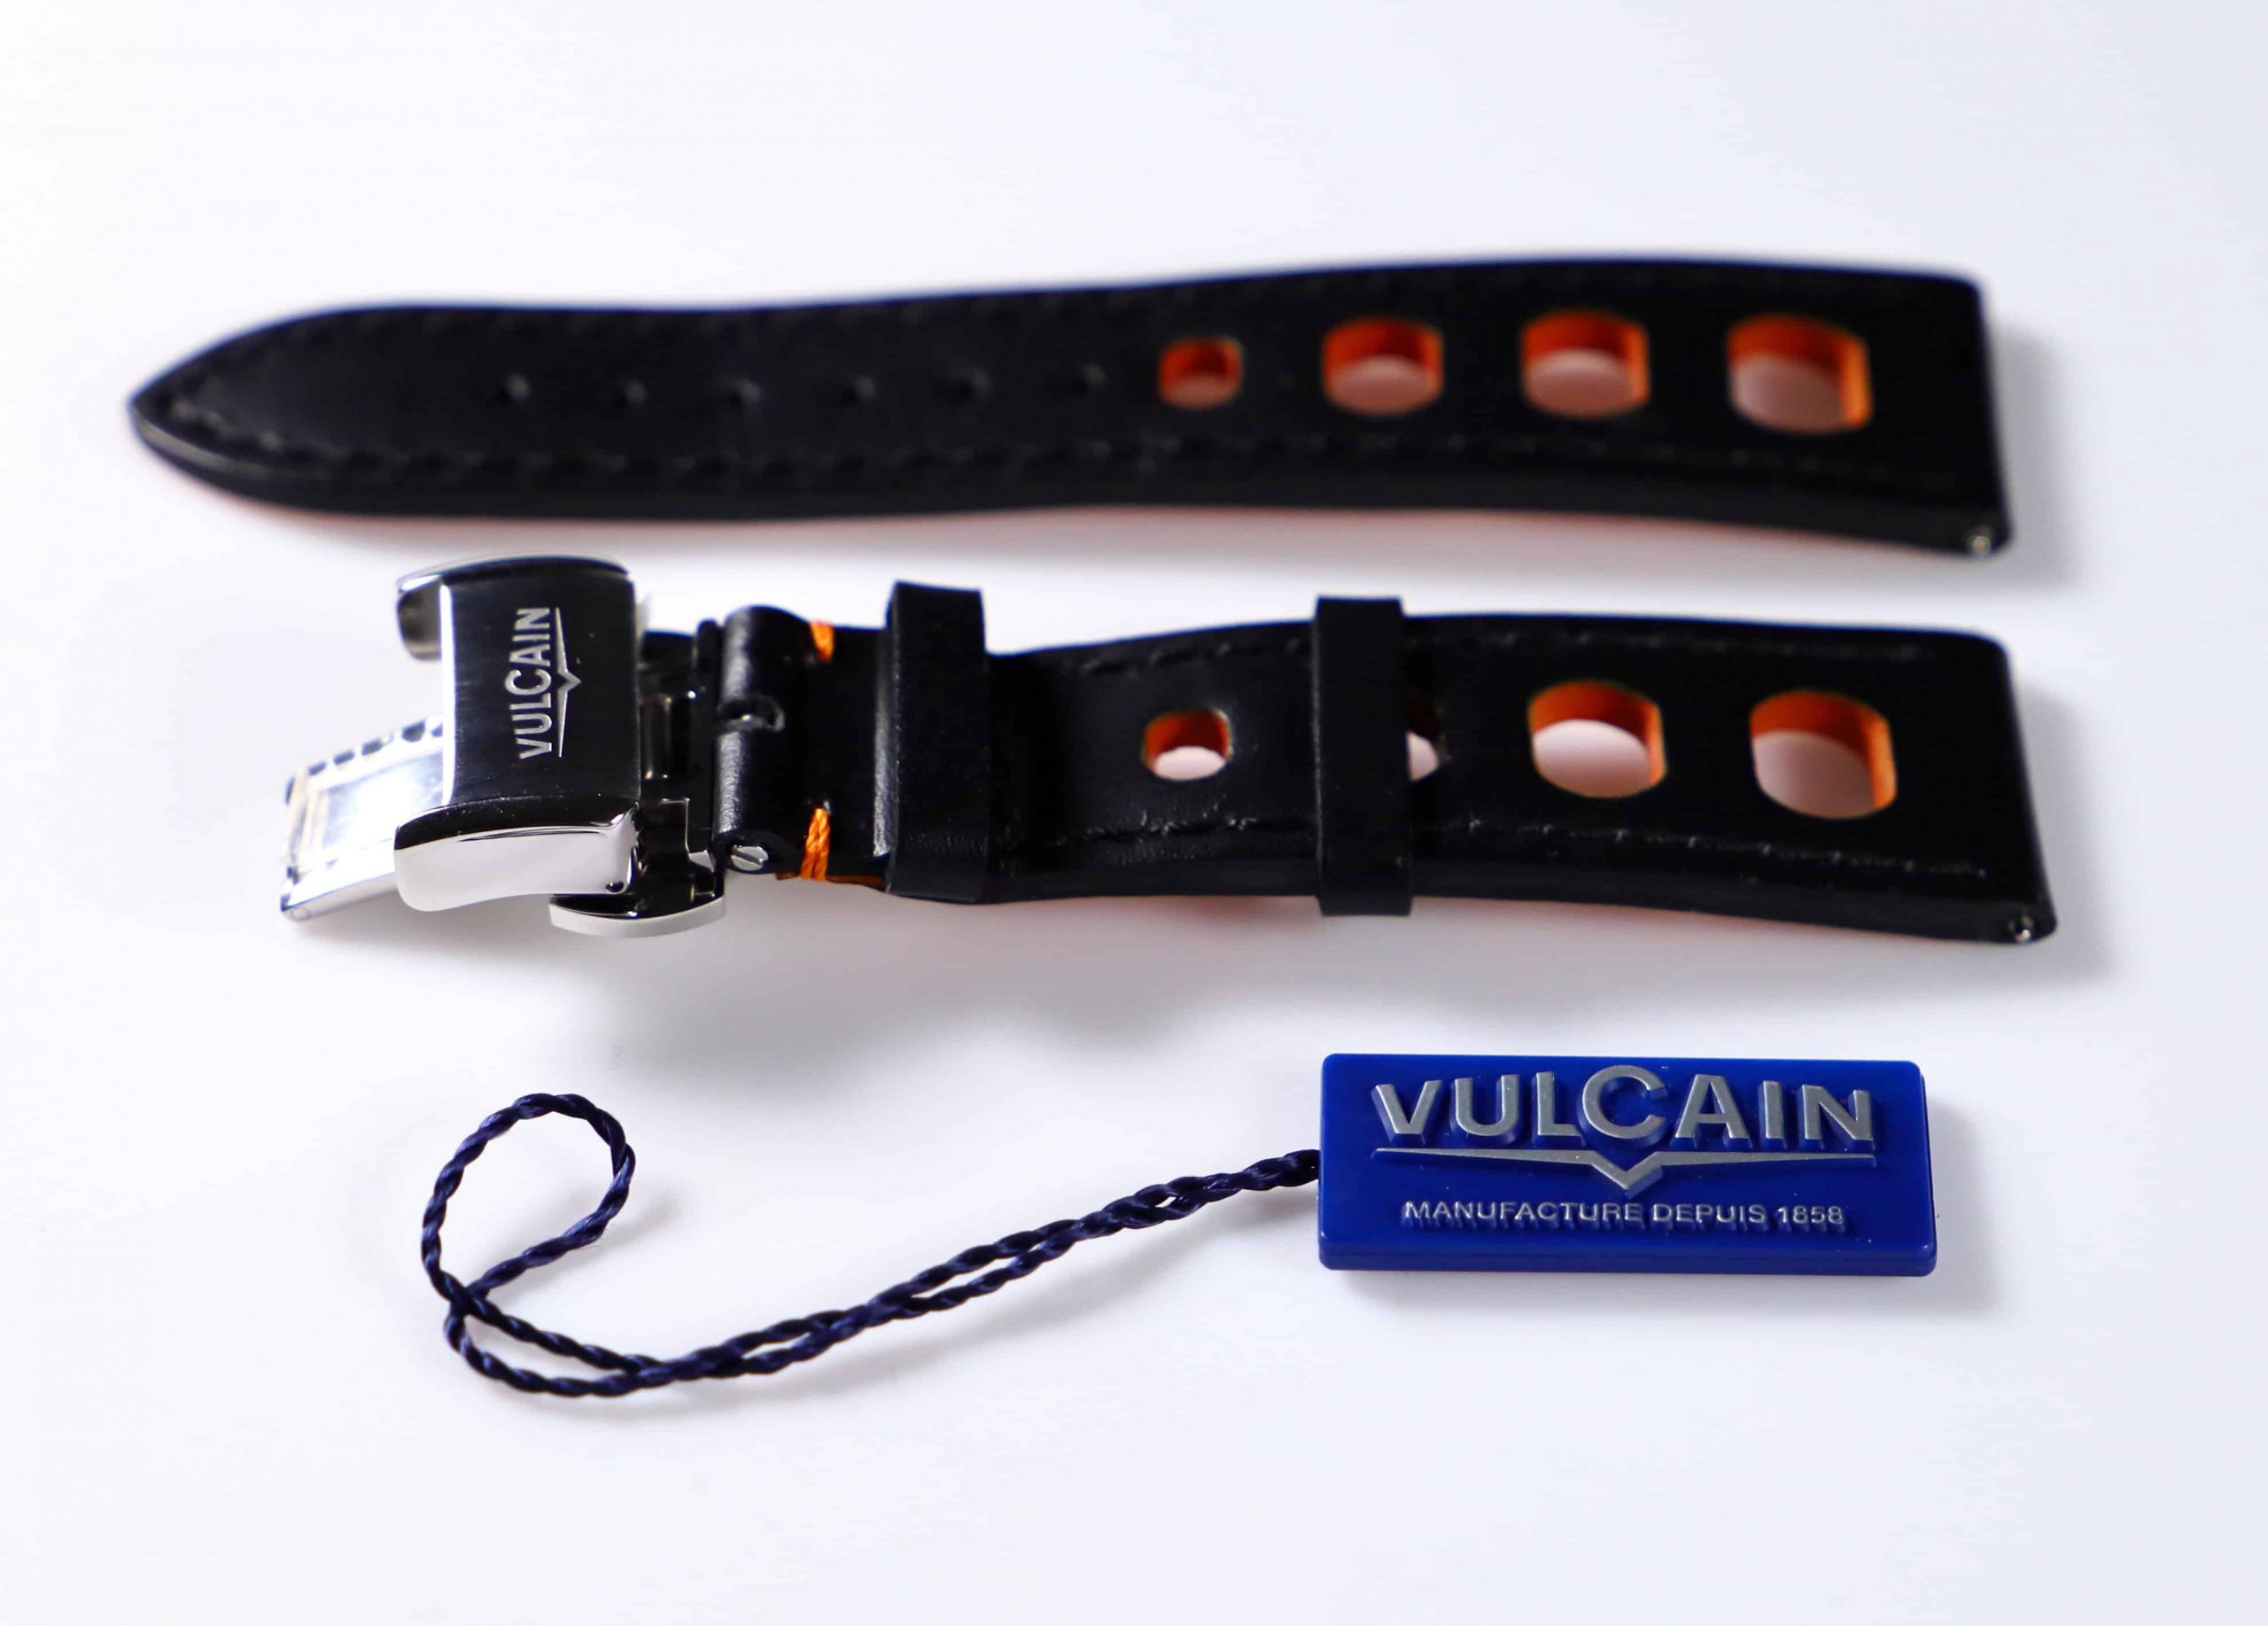 Vulcain Nautical 22MM Leather Strap with Vulcain Hang Tag - Rare Watch Parts